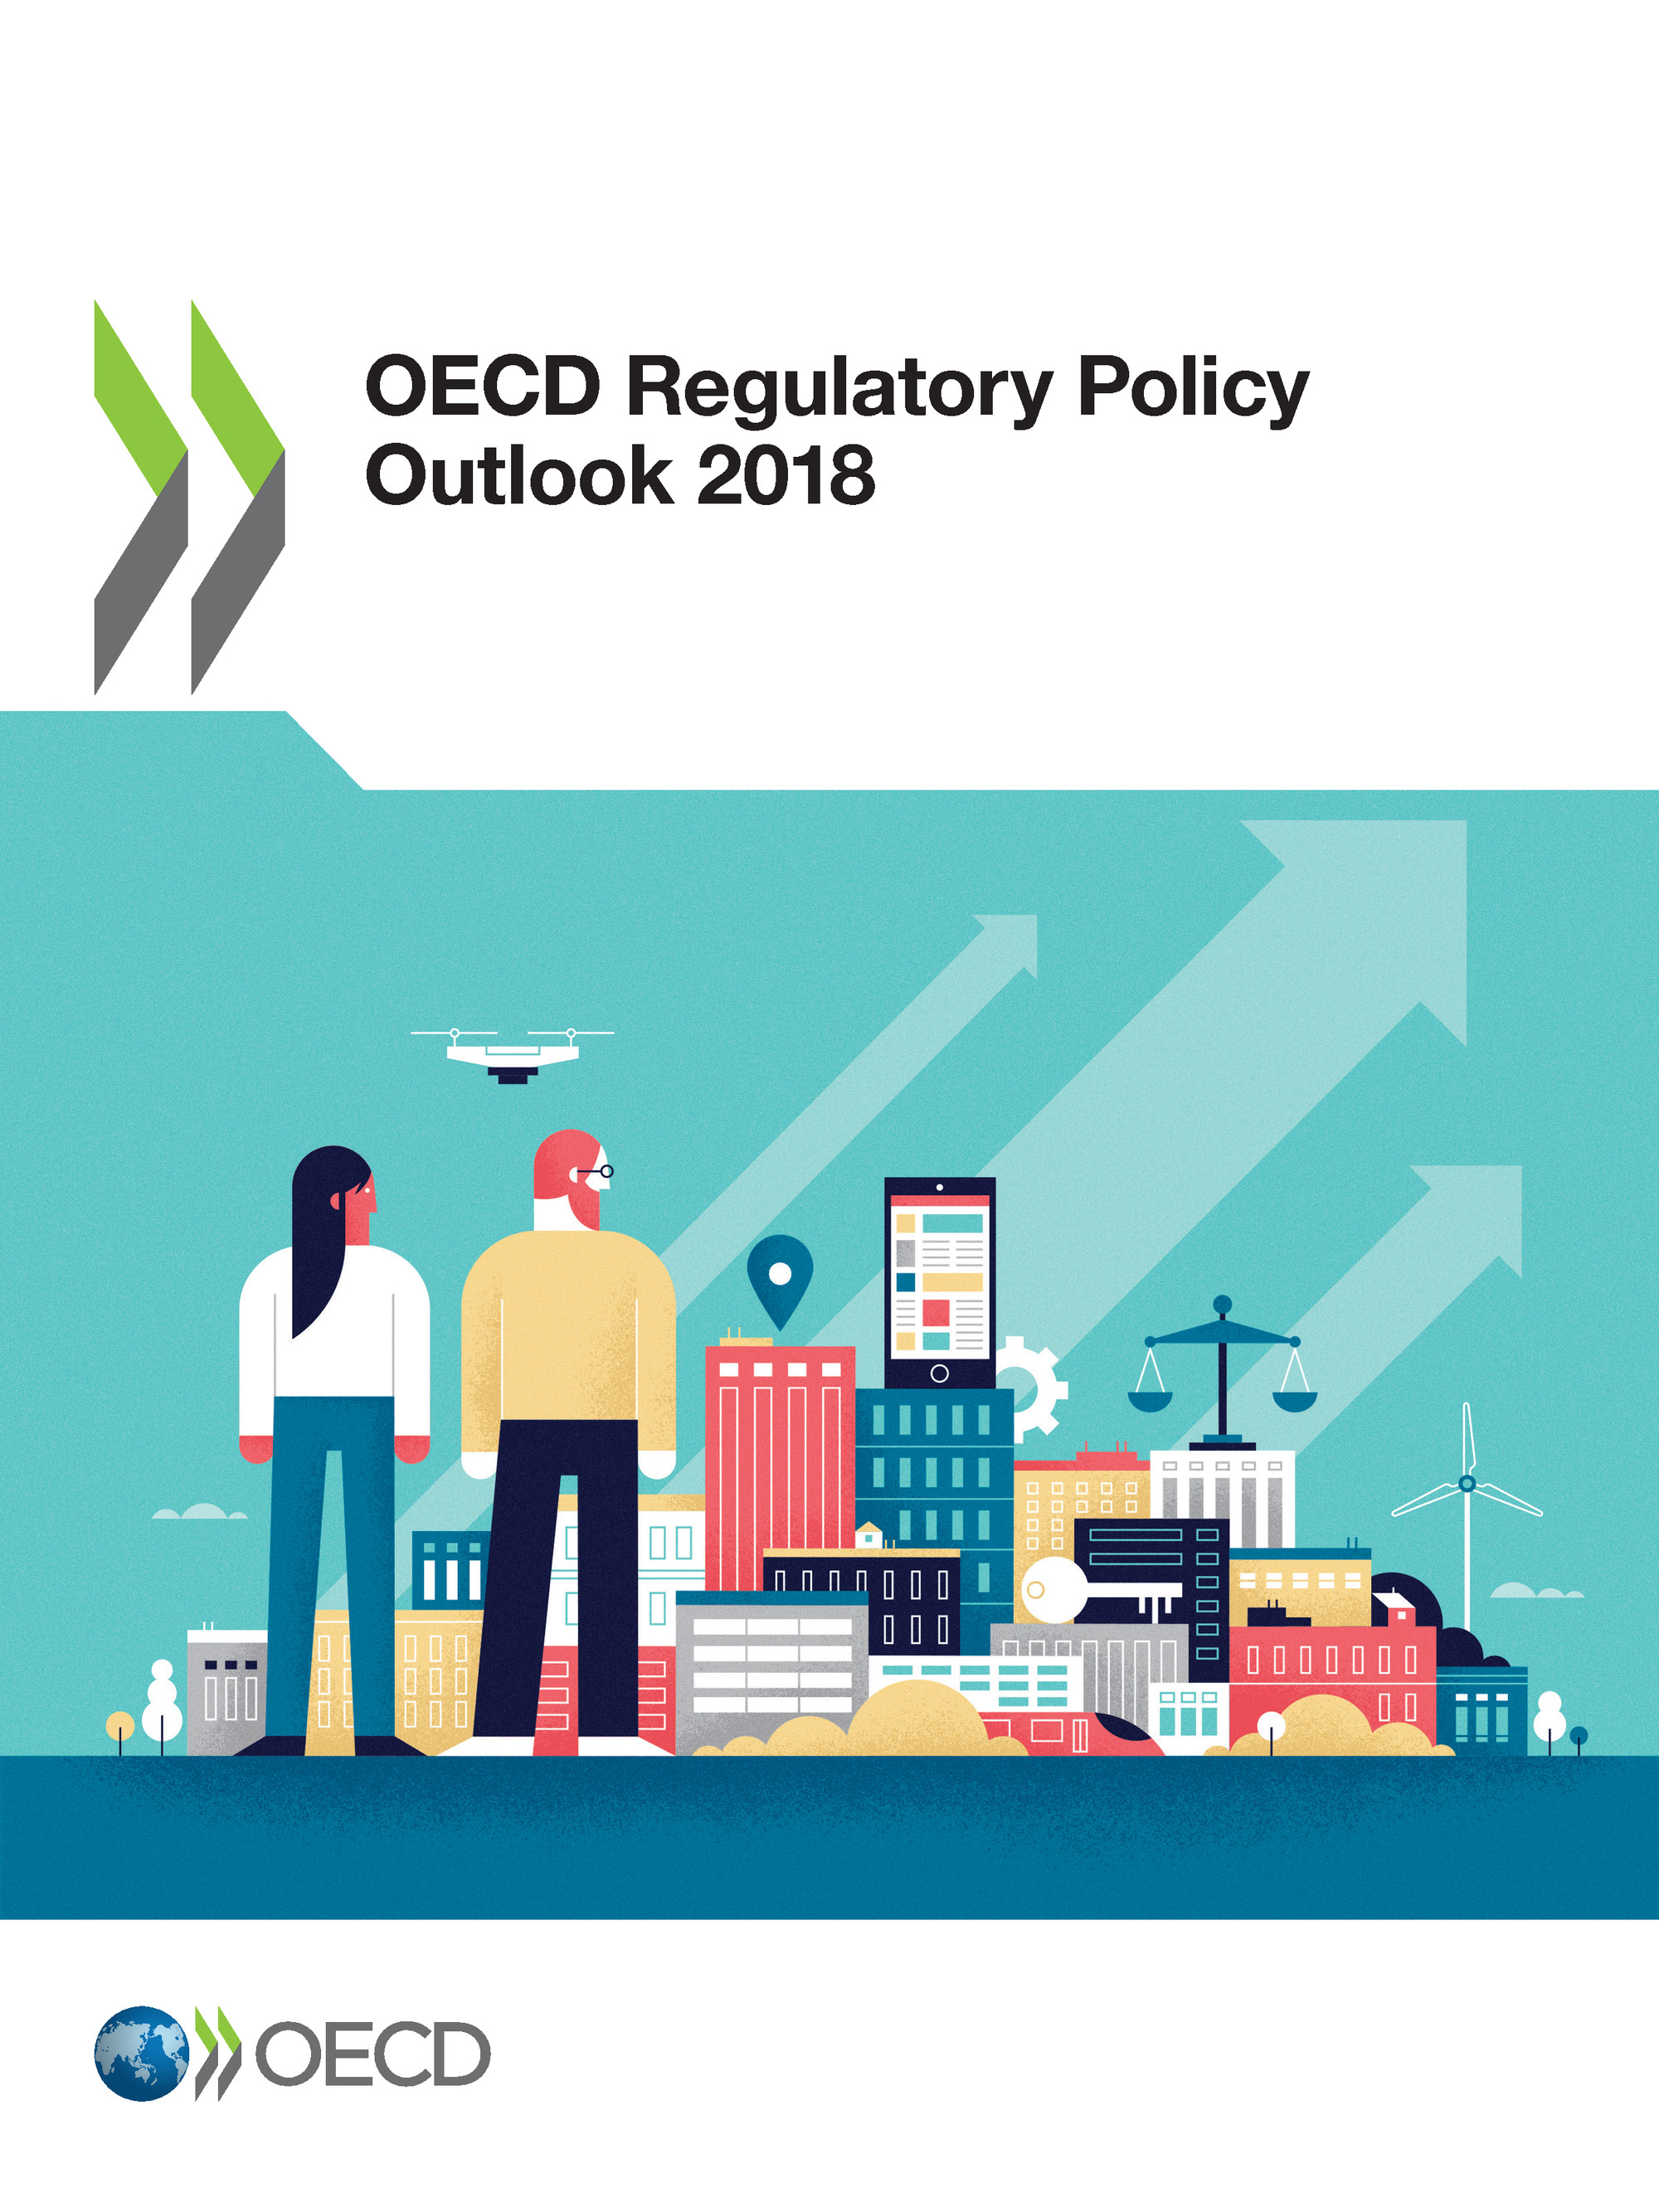 OECD Regulatory Policy Outlook 2018 -  Collectif - OCDE / OECD